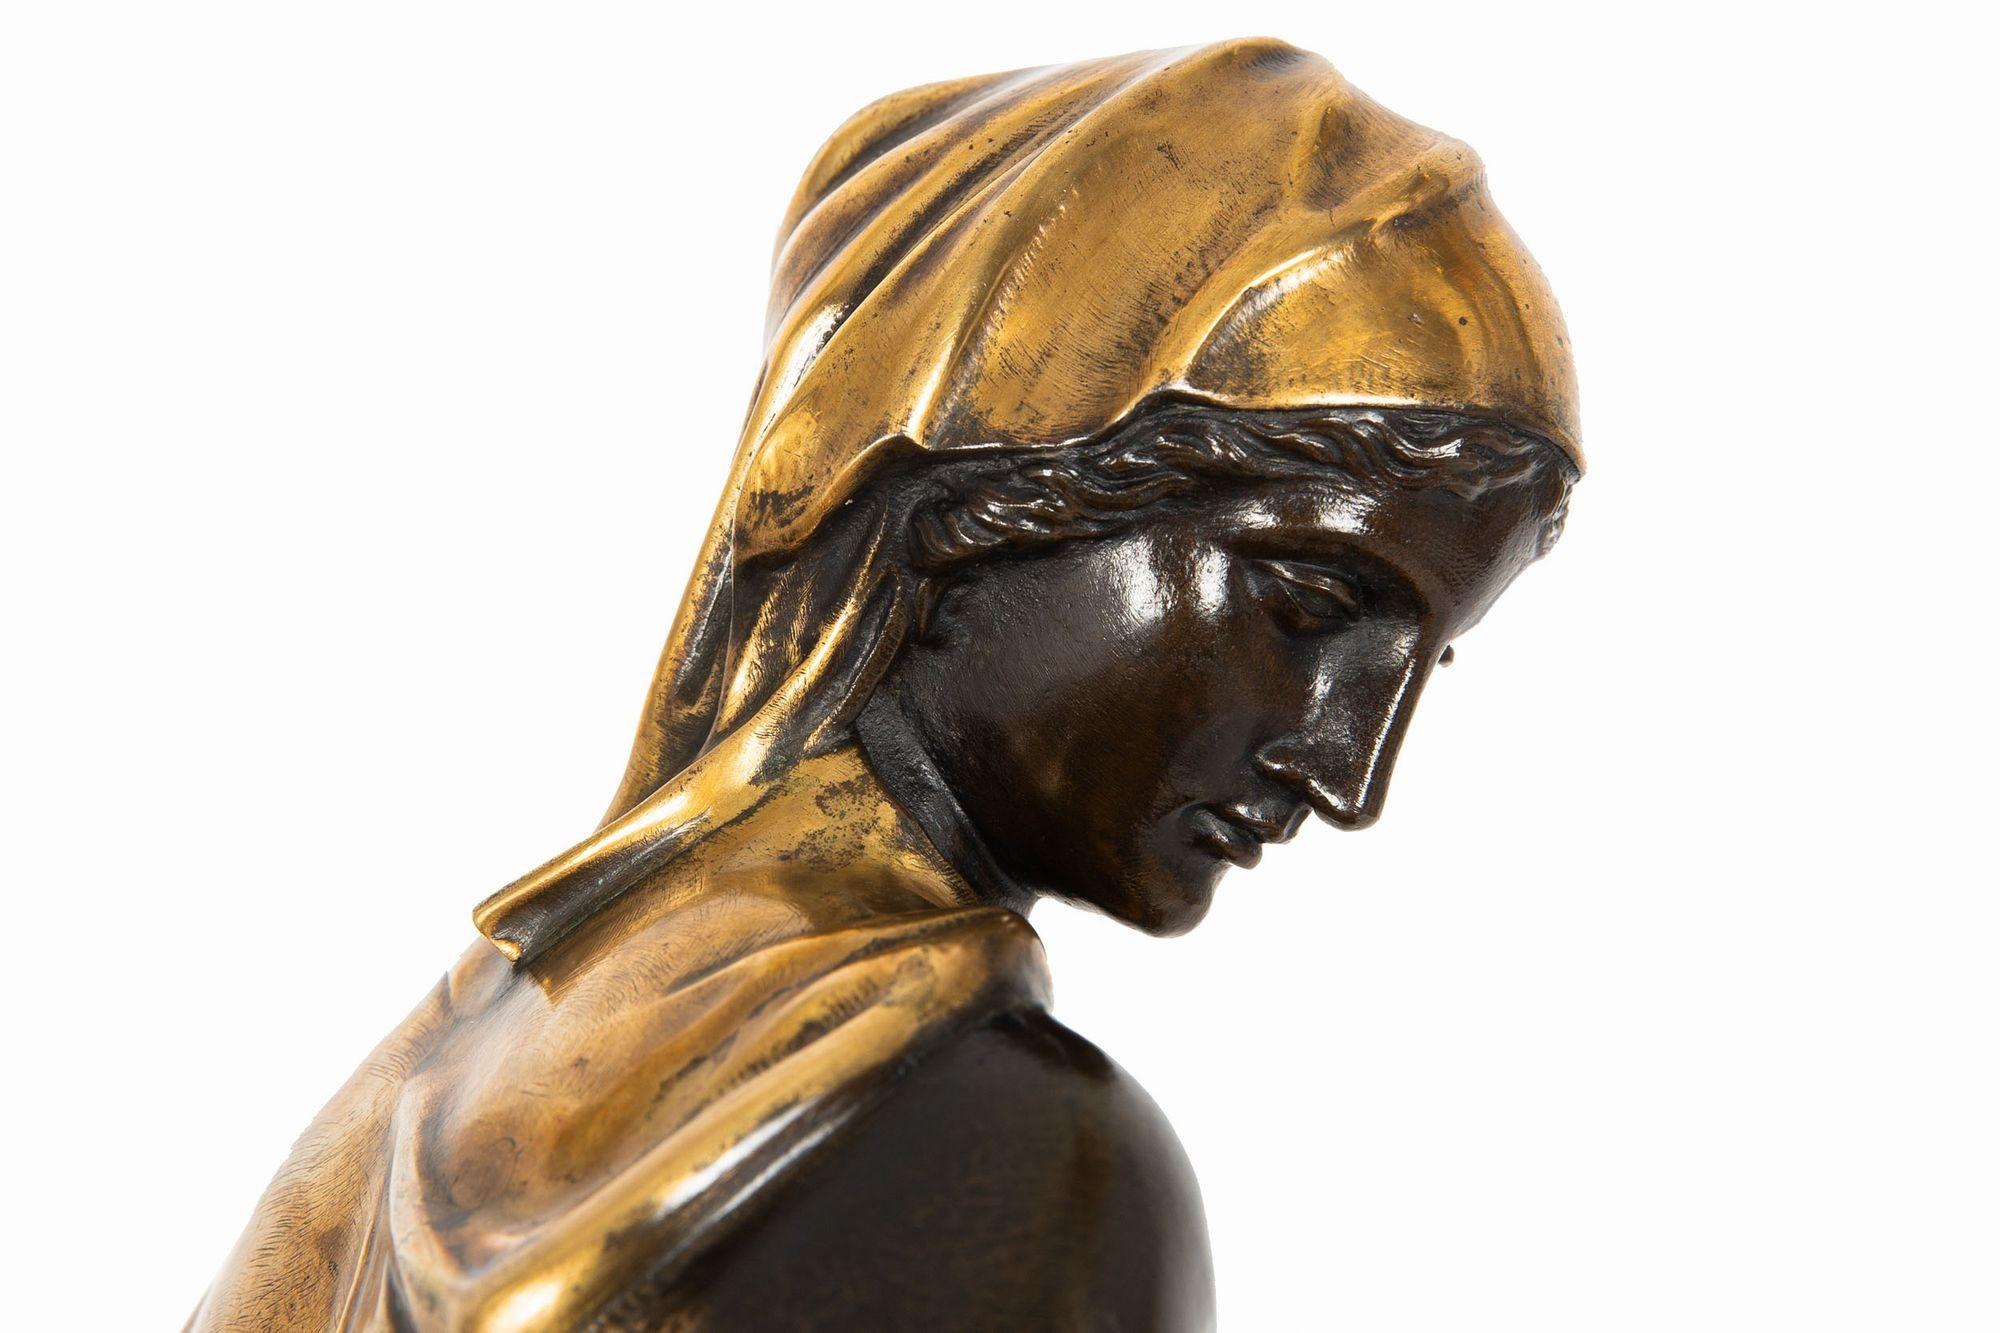 English Bronze Sculpture “Mercy on Battlefield” (1856), Edward Bowring Stephens 1